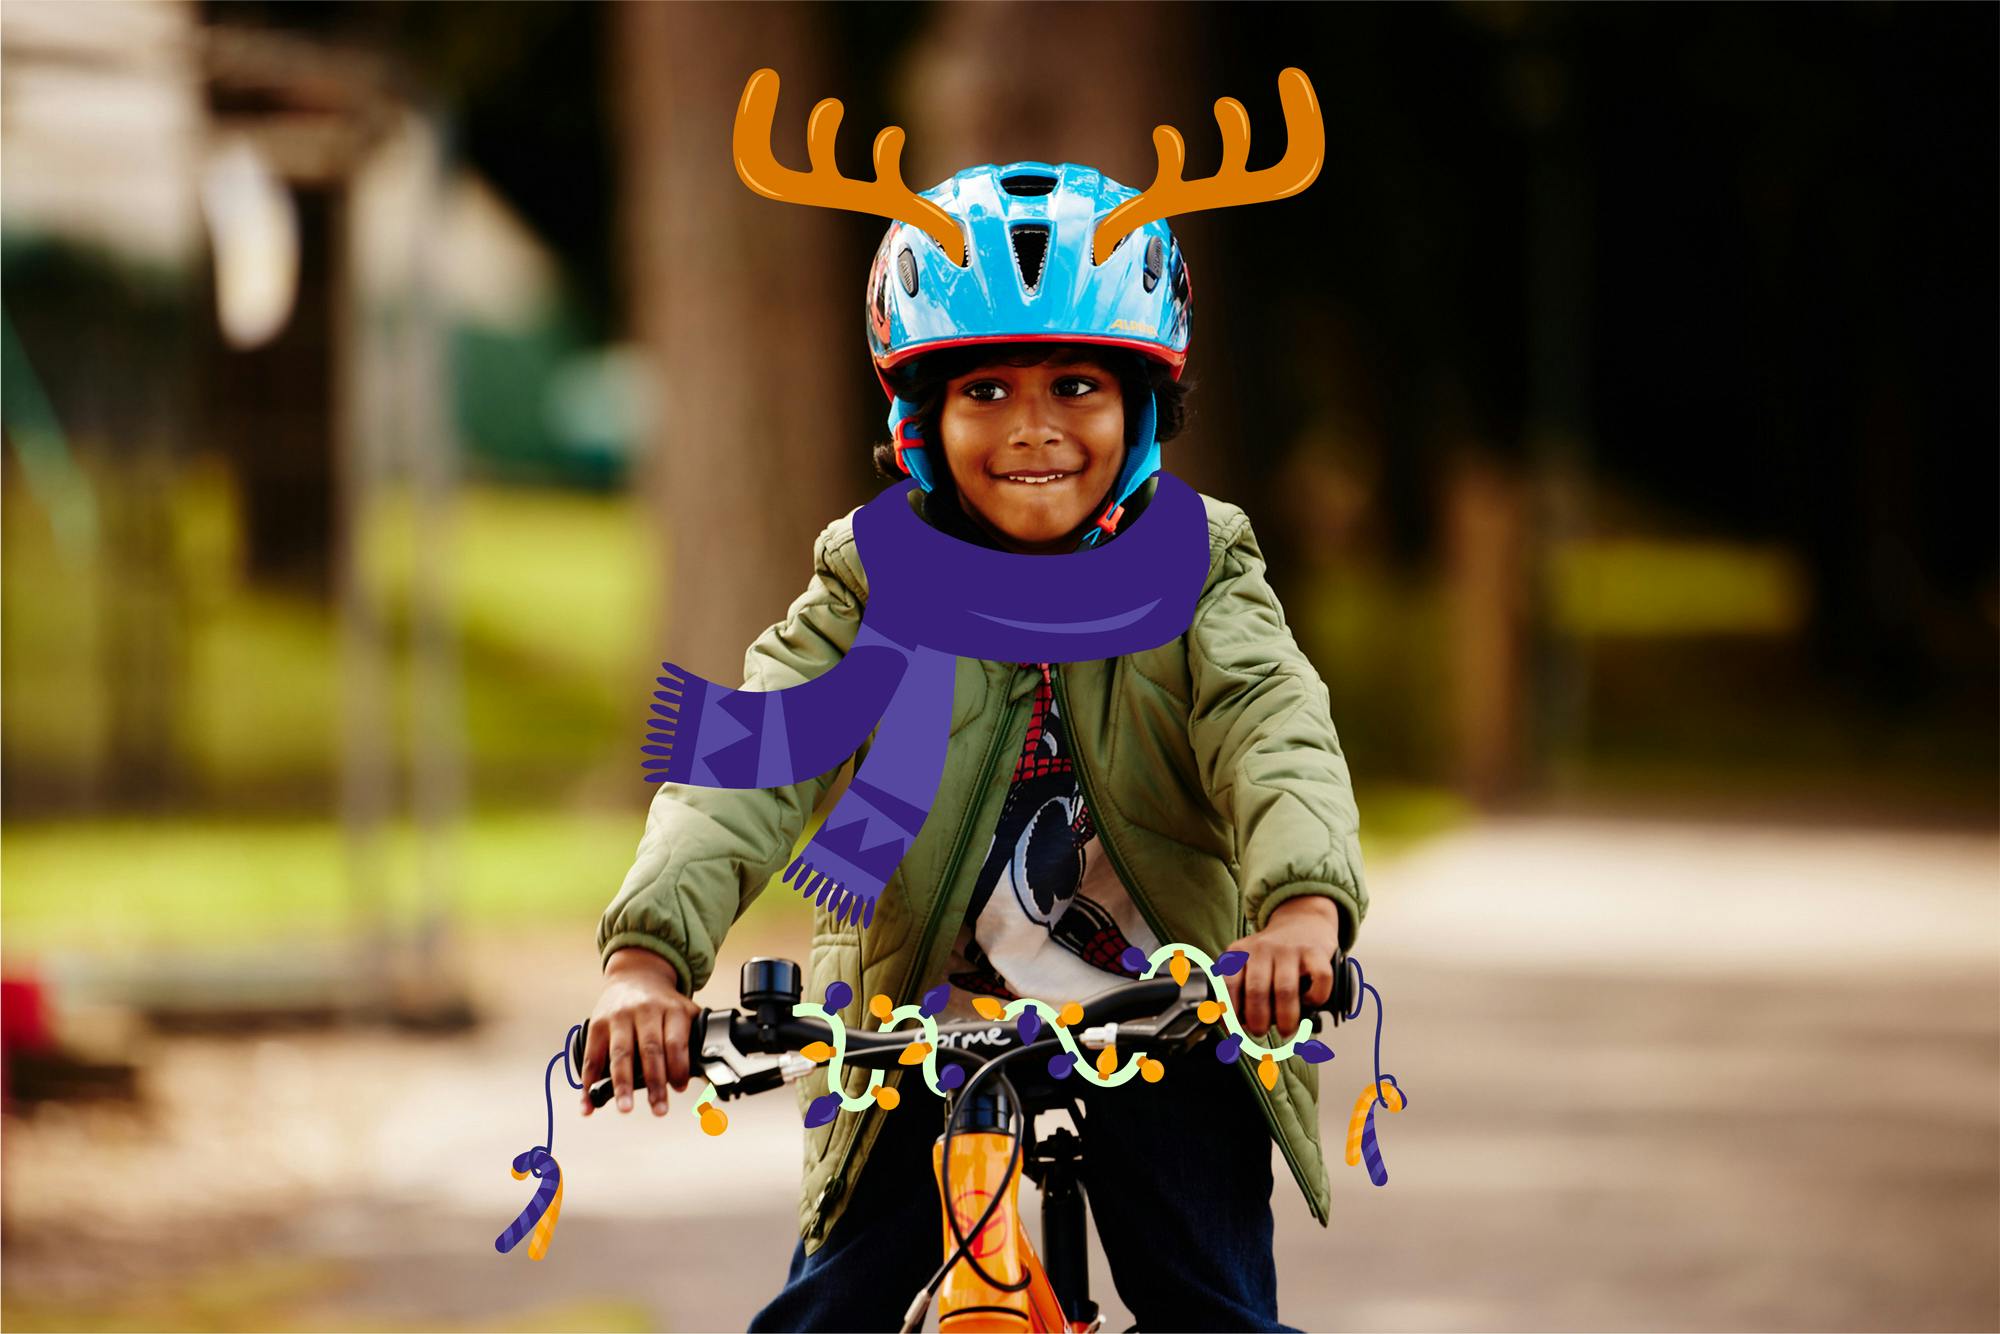 A child with a Christmas helmet on a bike